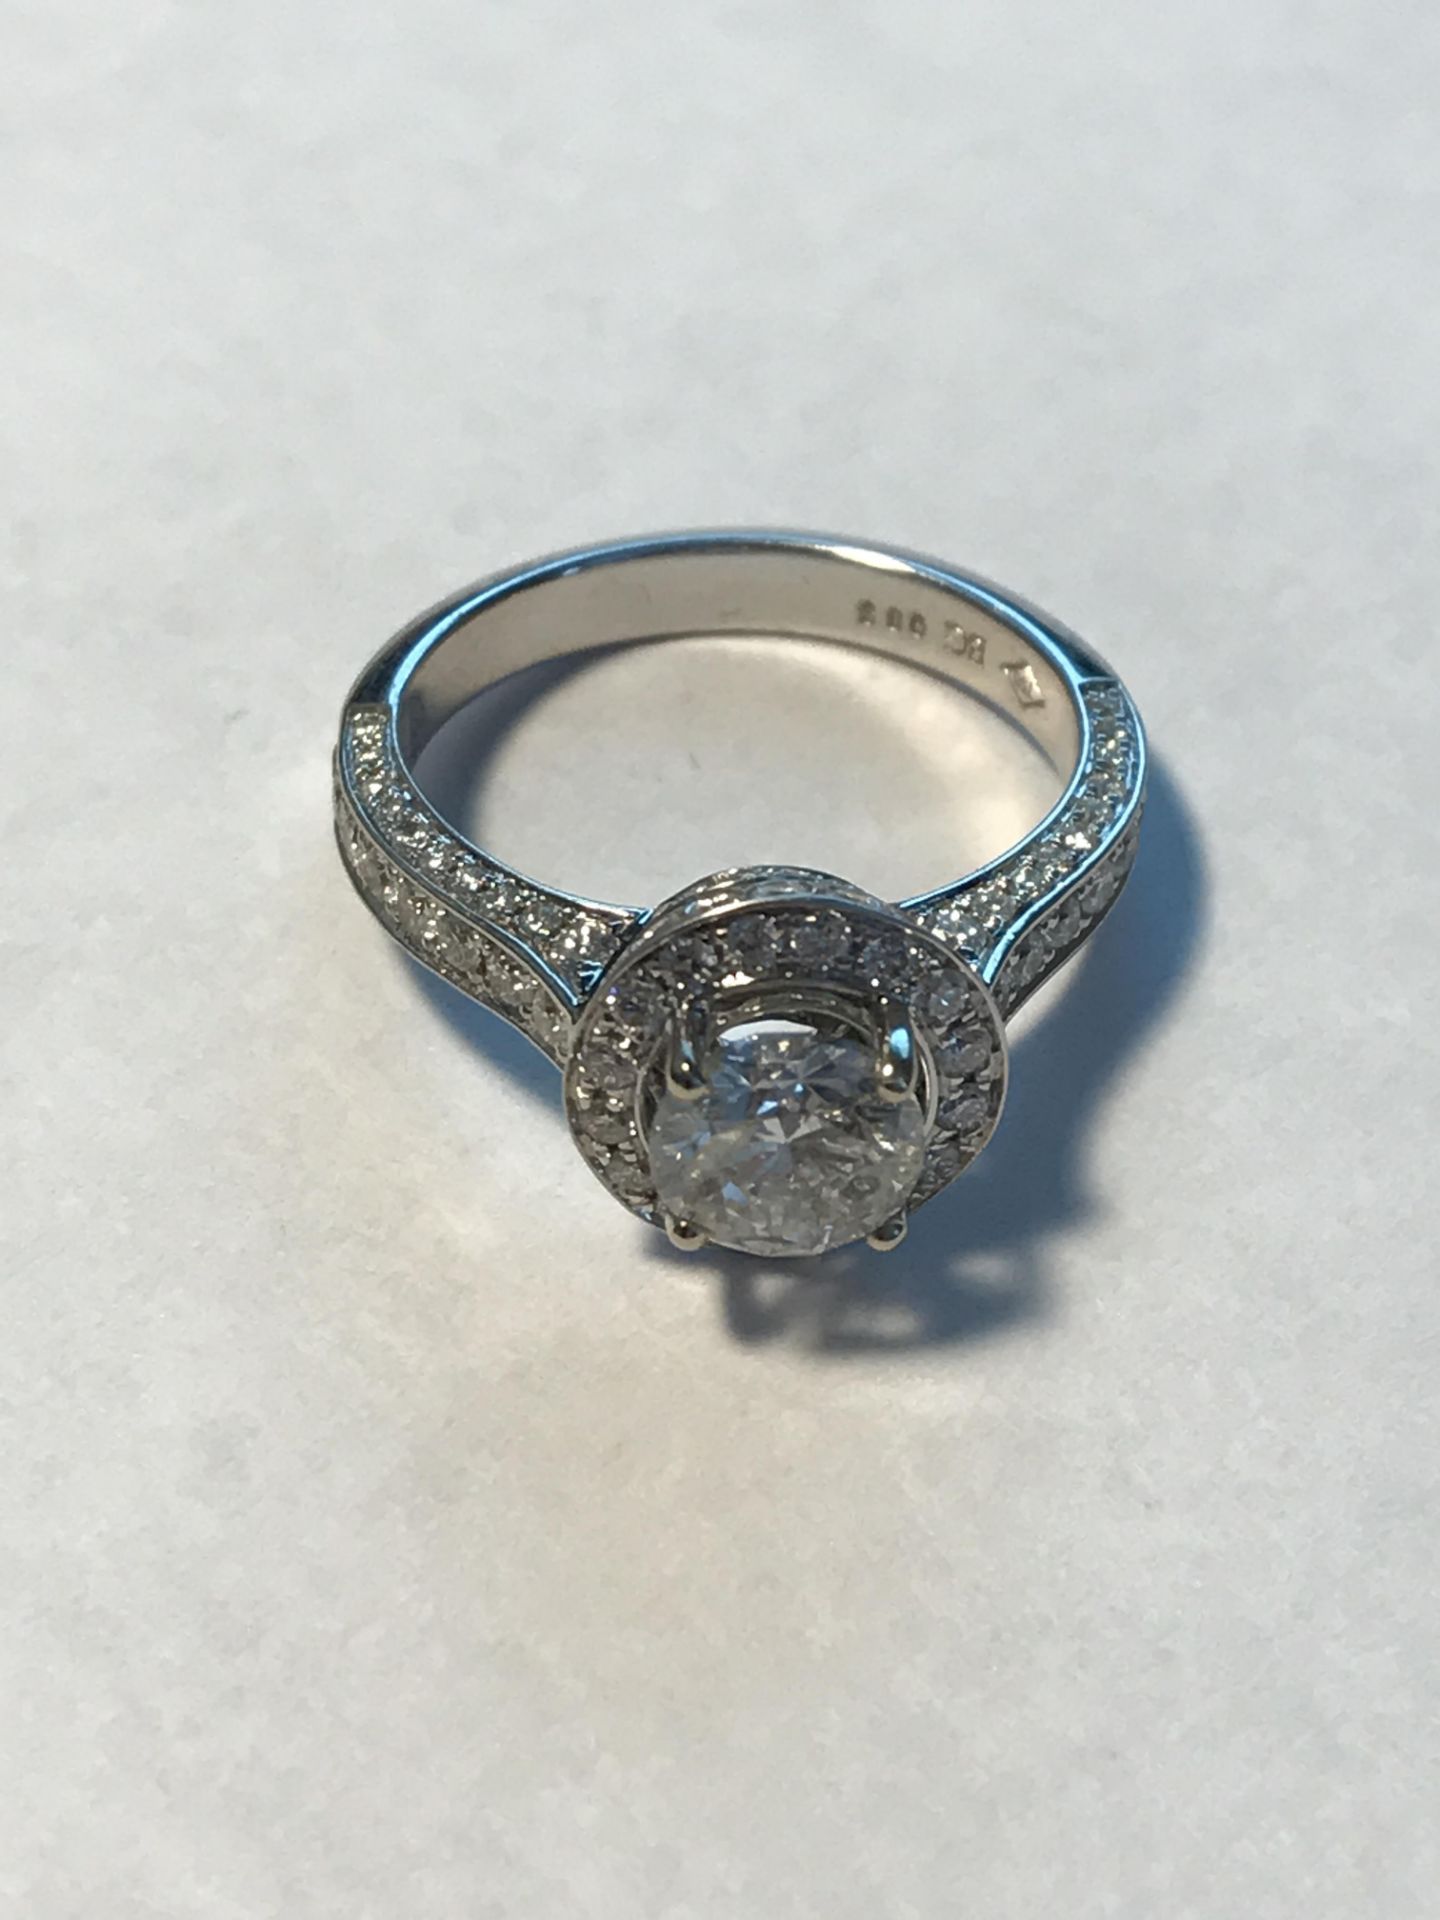 18 Carat White Gold Diamond Engagement Ring - Unworn 10/10 Condition - Image 8 of 18